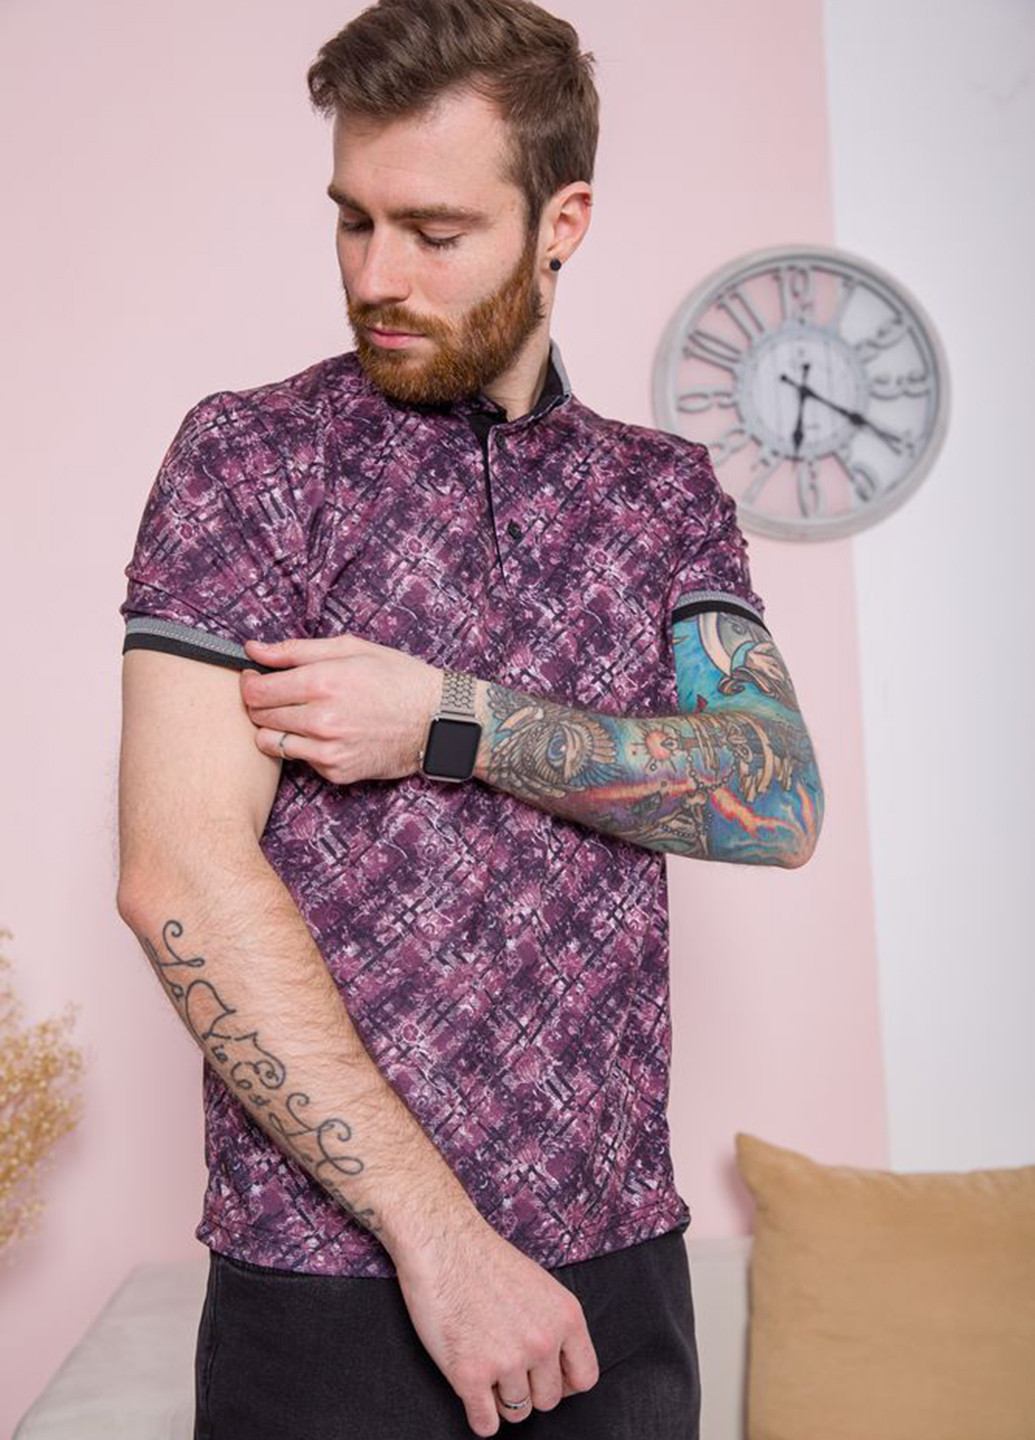 Сиреневая футболка-поло для мужчин Ager с геометрическим узором